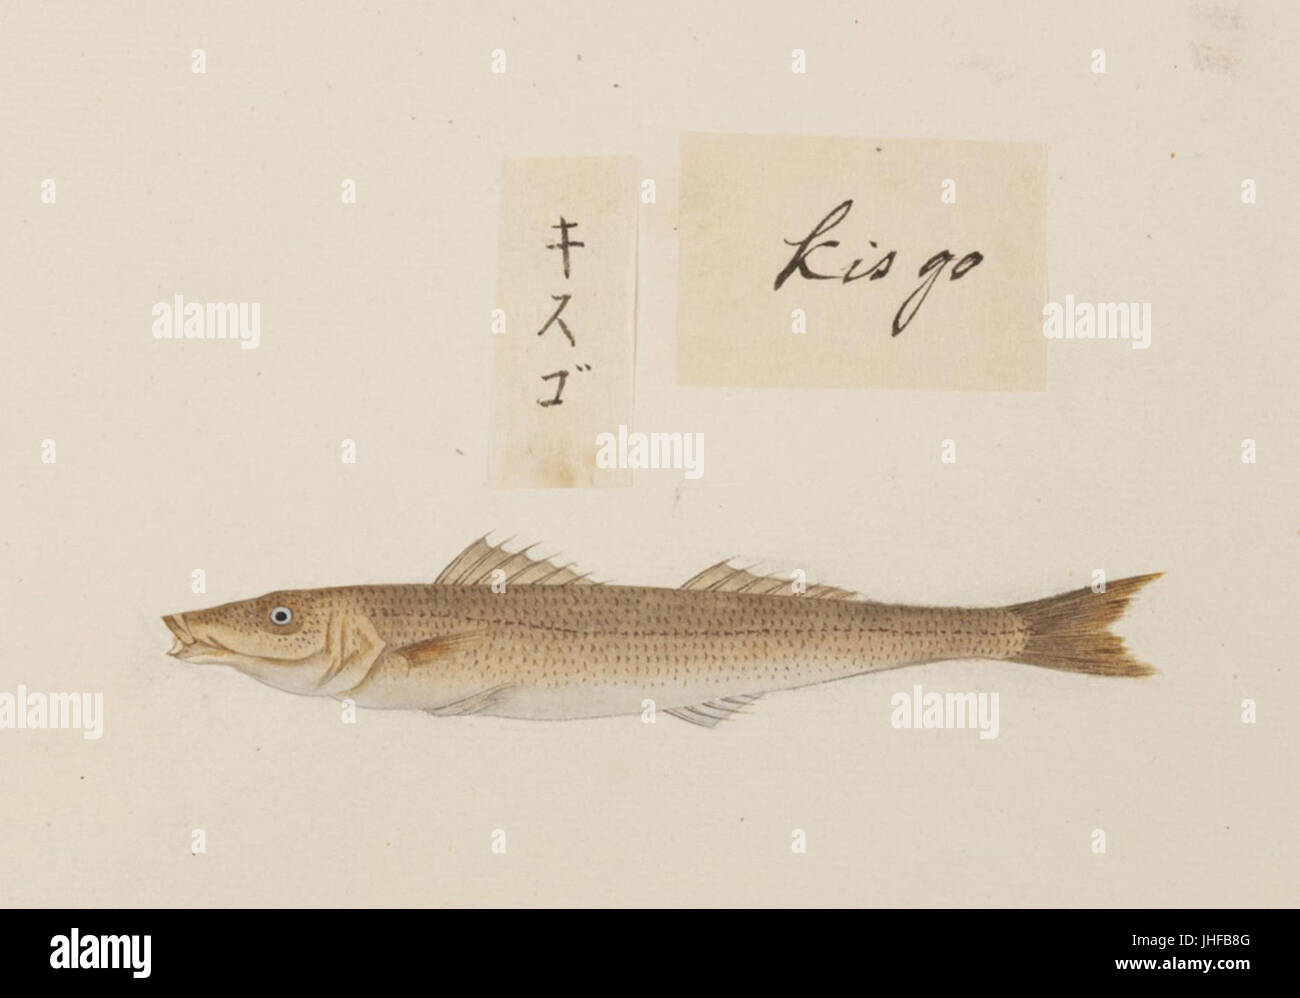 Naturalis Biodiversity Center - RMNH.ART.539 - Sillago japonica - Kawahara Keiga - 1823 - 1829 - Siebold Collection - pencil drawing - water colour Stock Photo